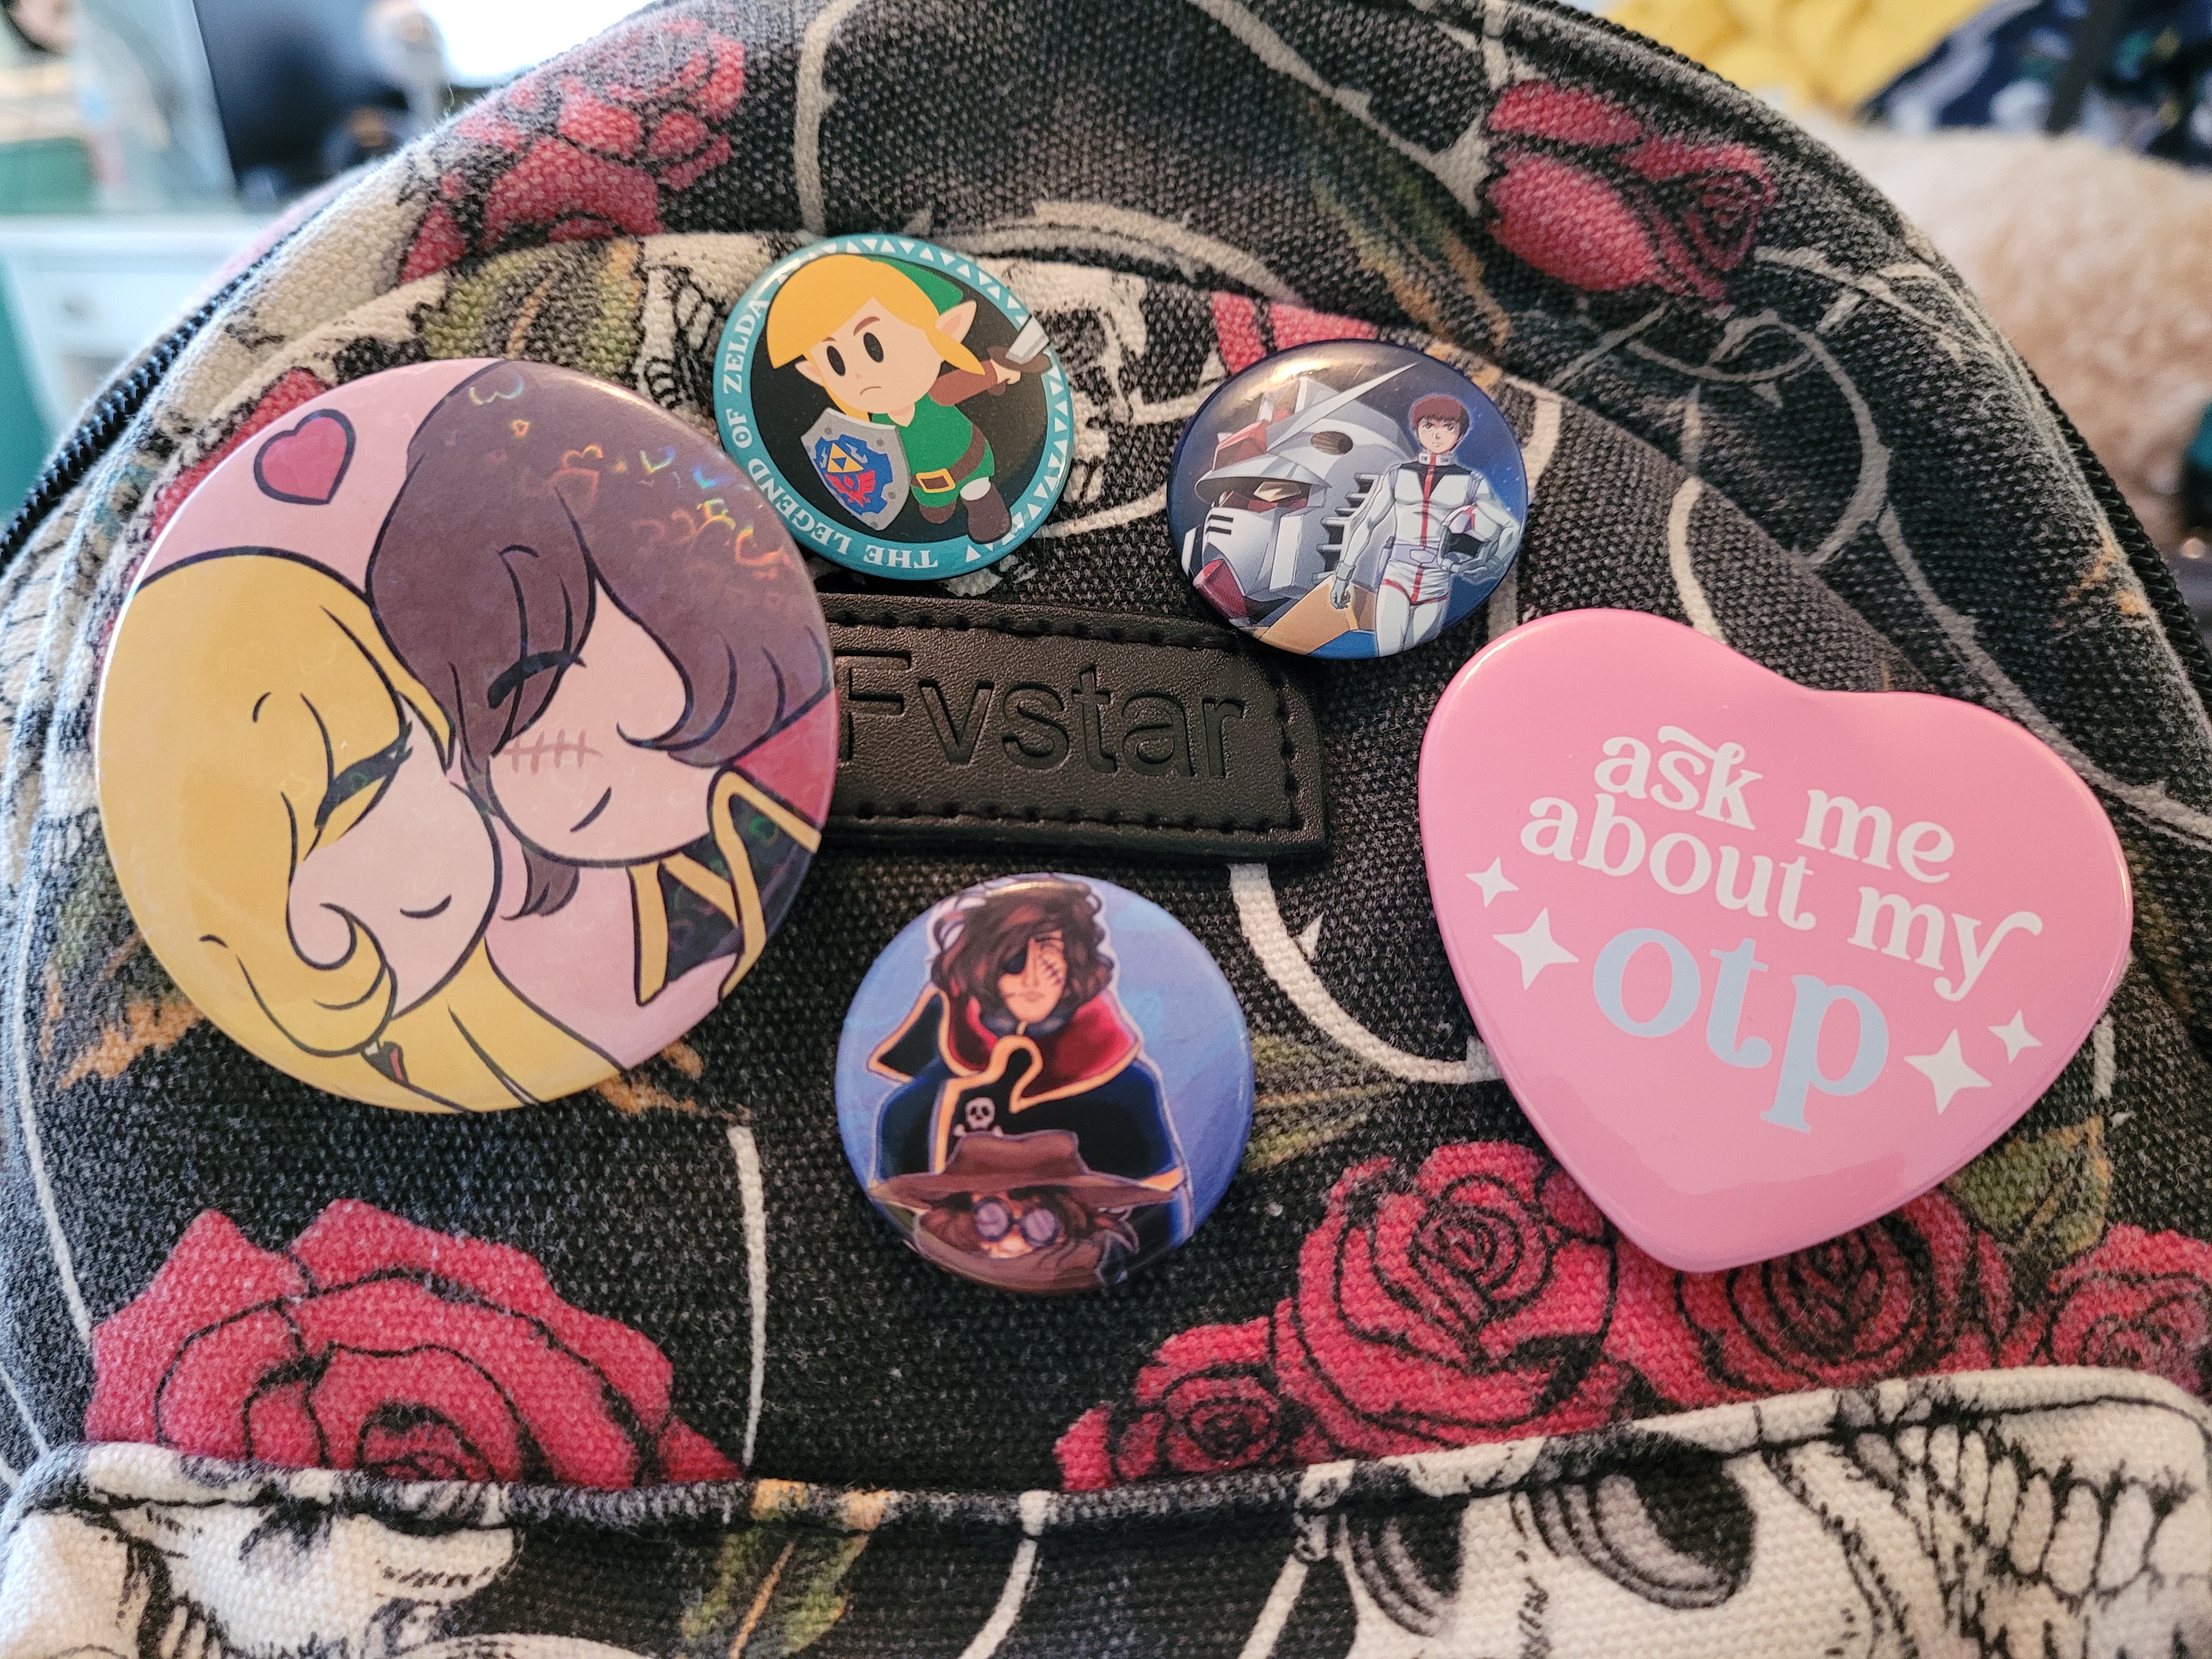 Pins on my bag